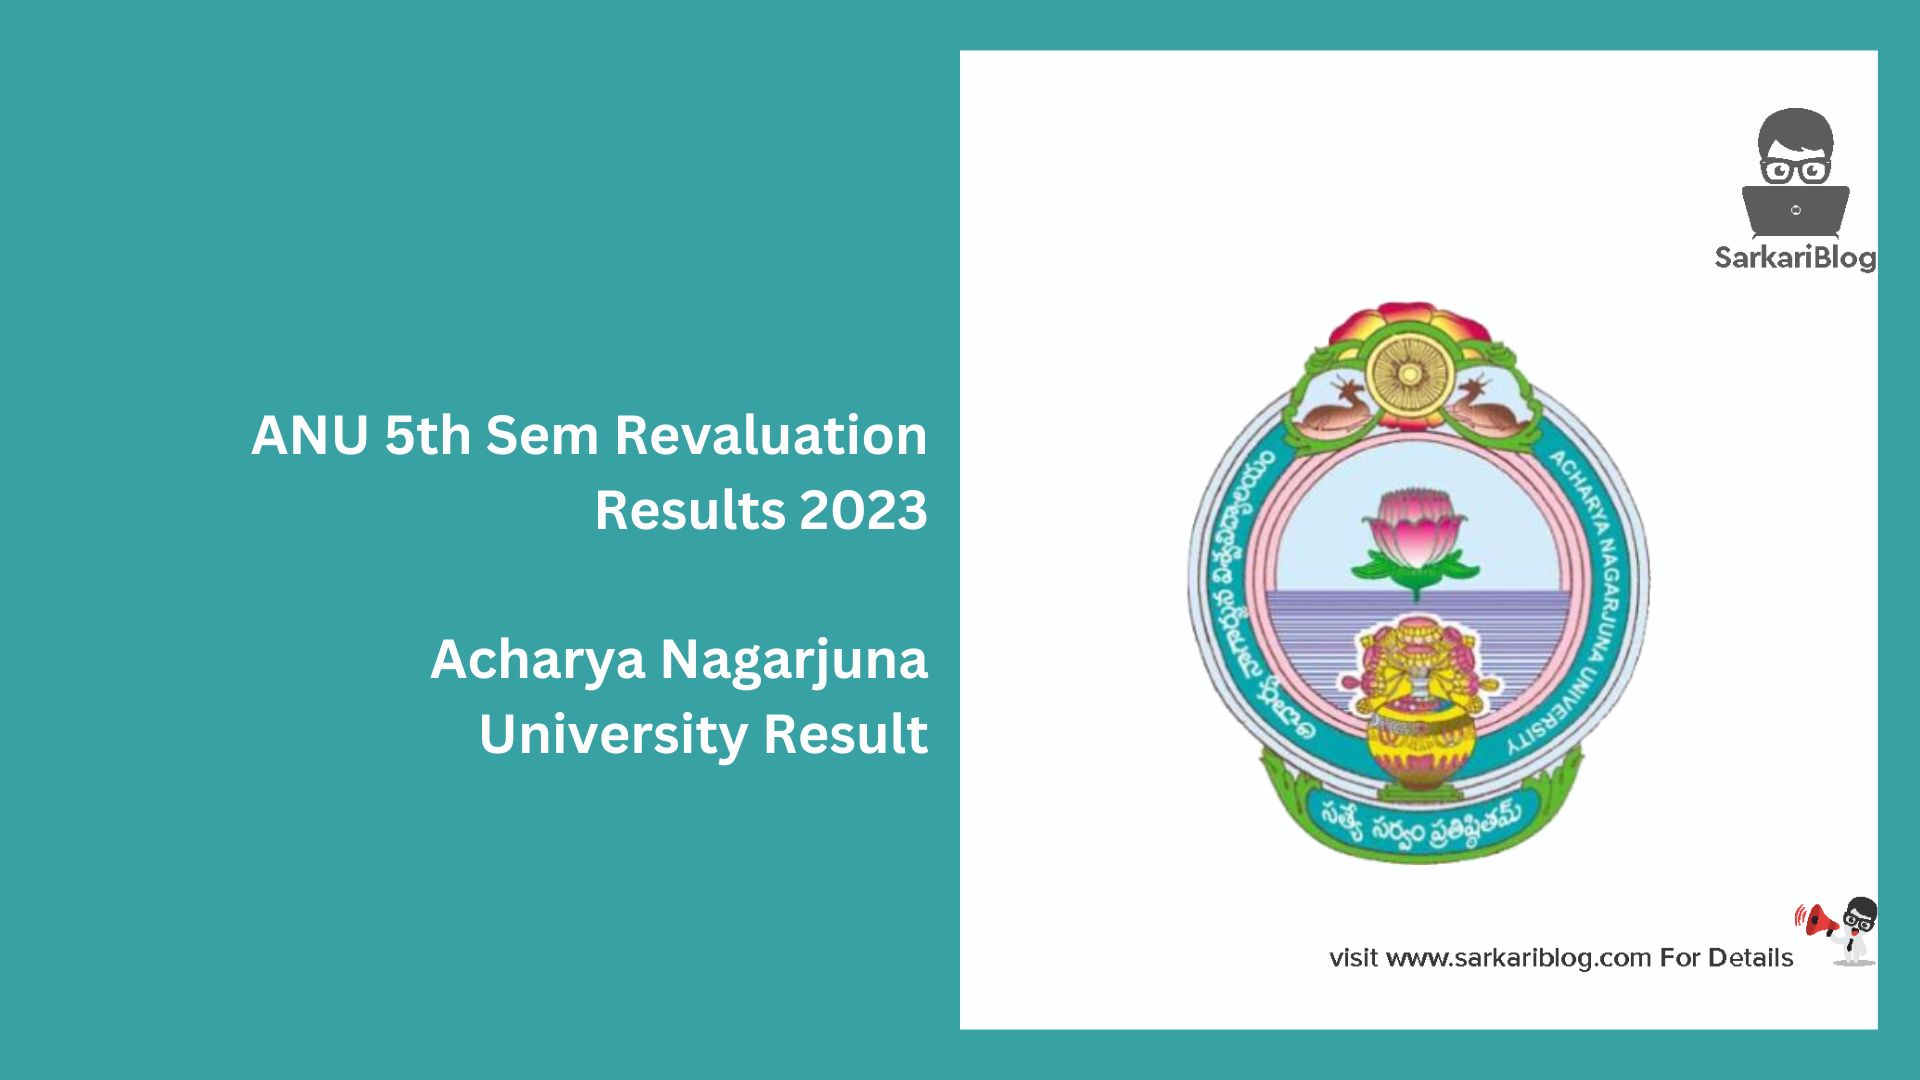 ANU 5th Sem Revaluation Results 2023